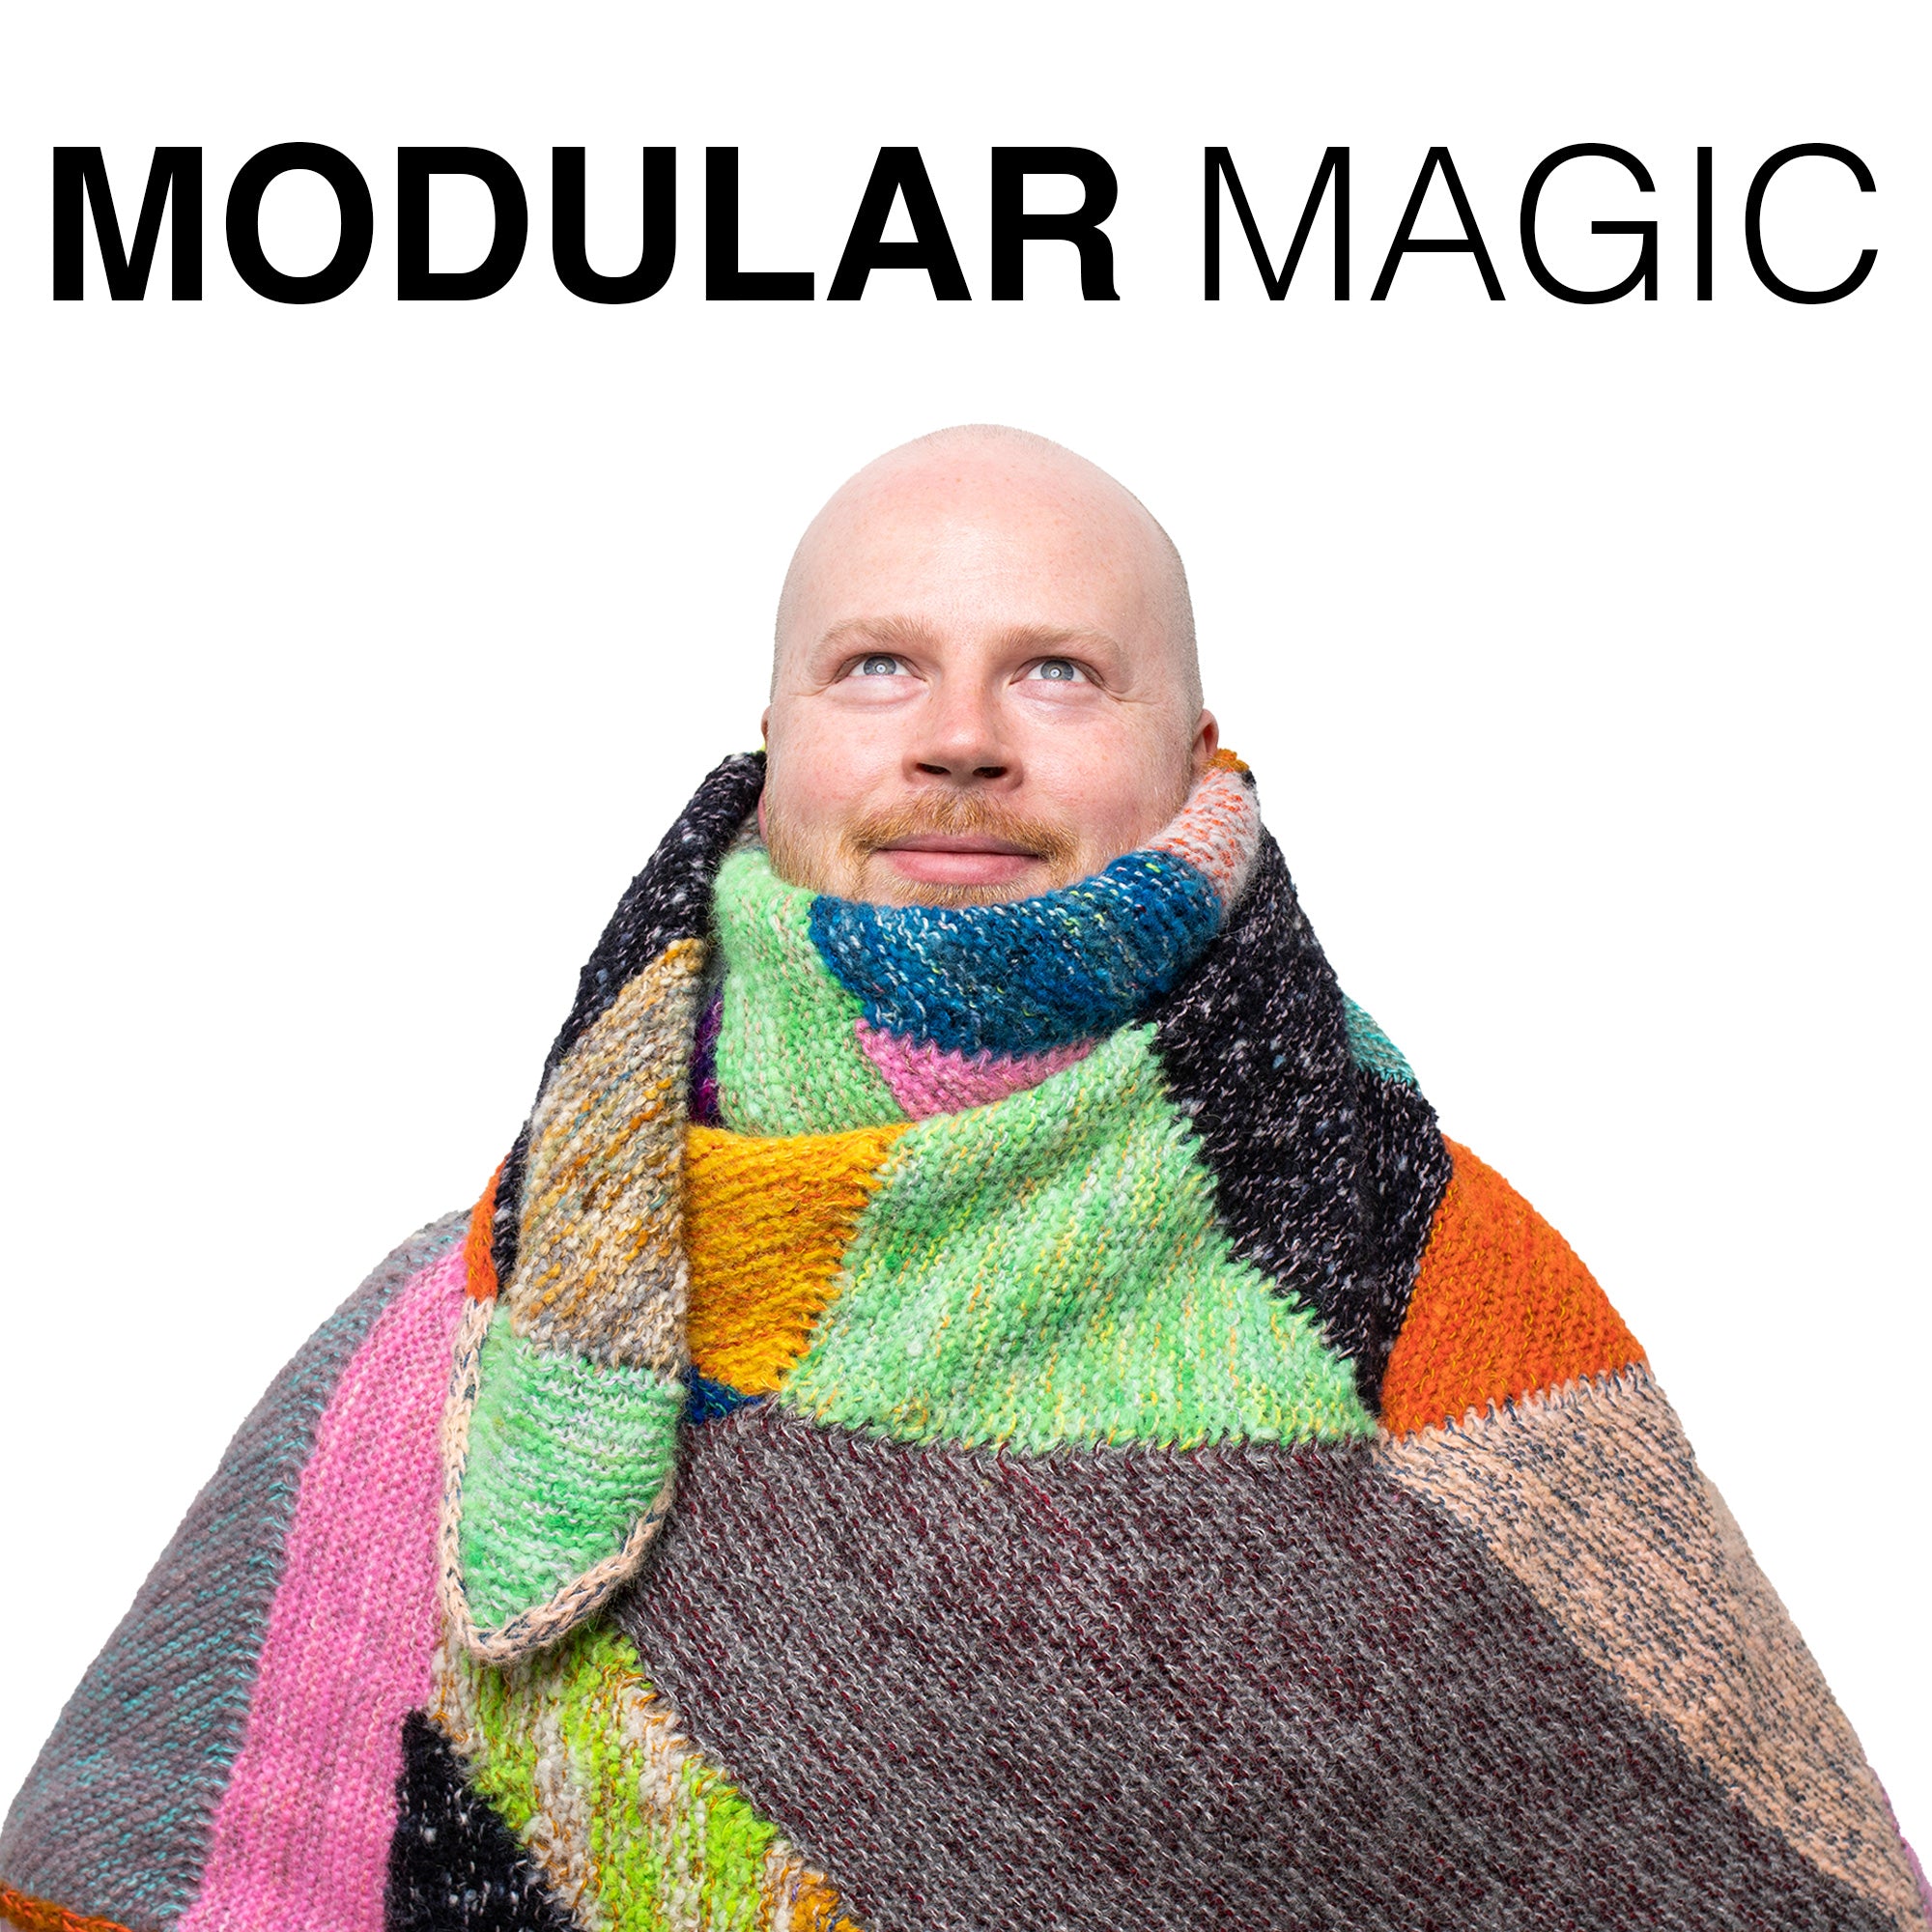 Modular Magic